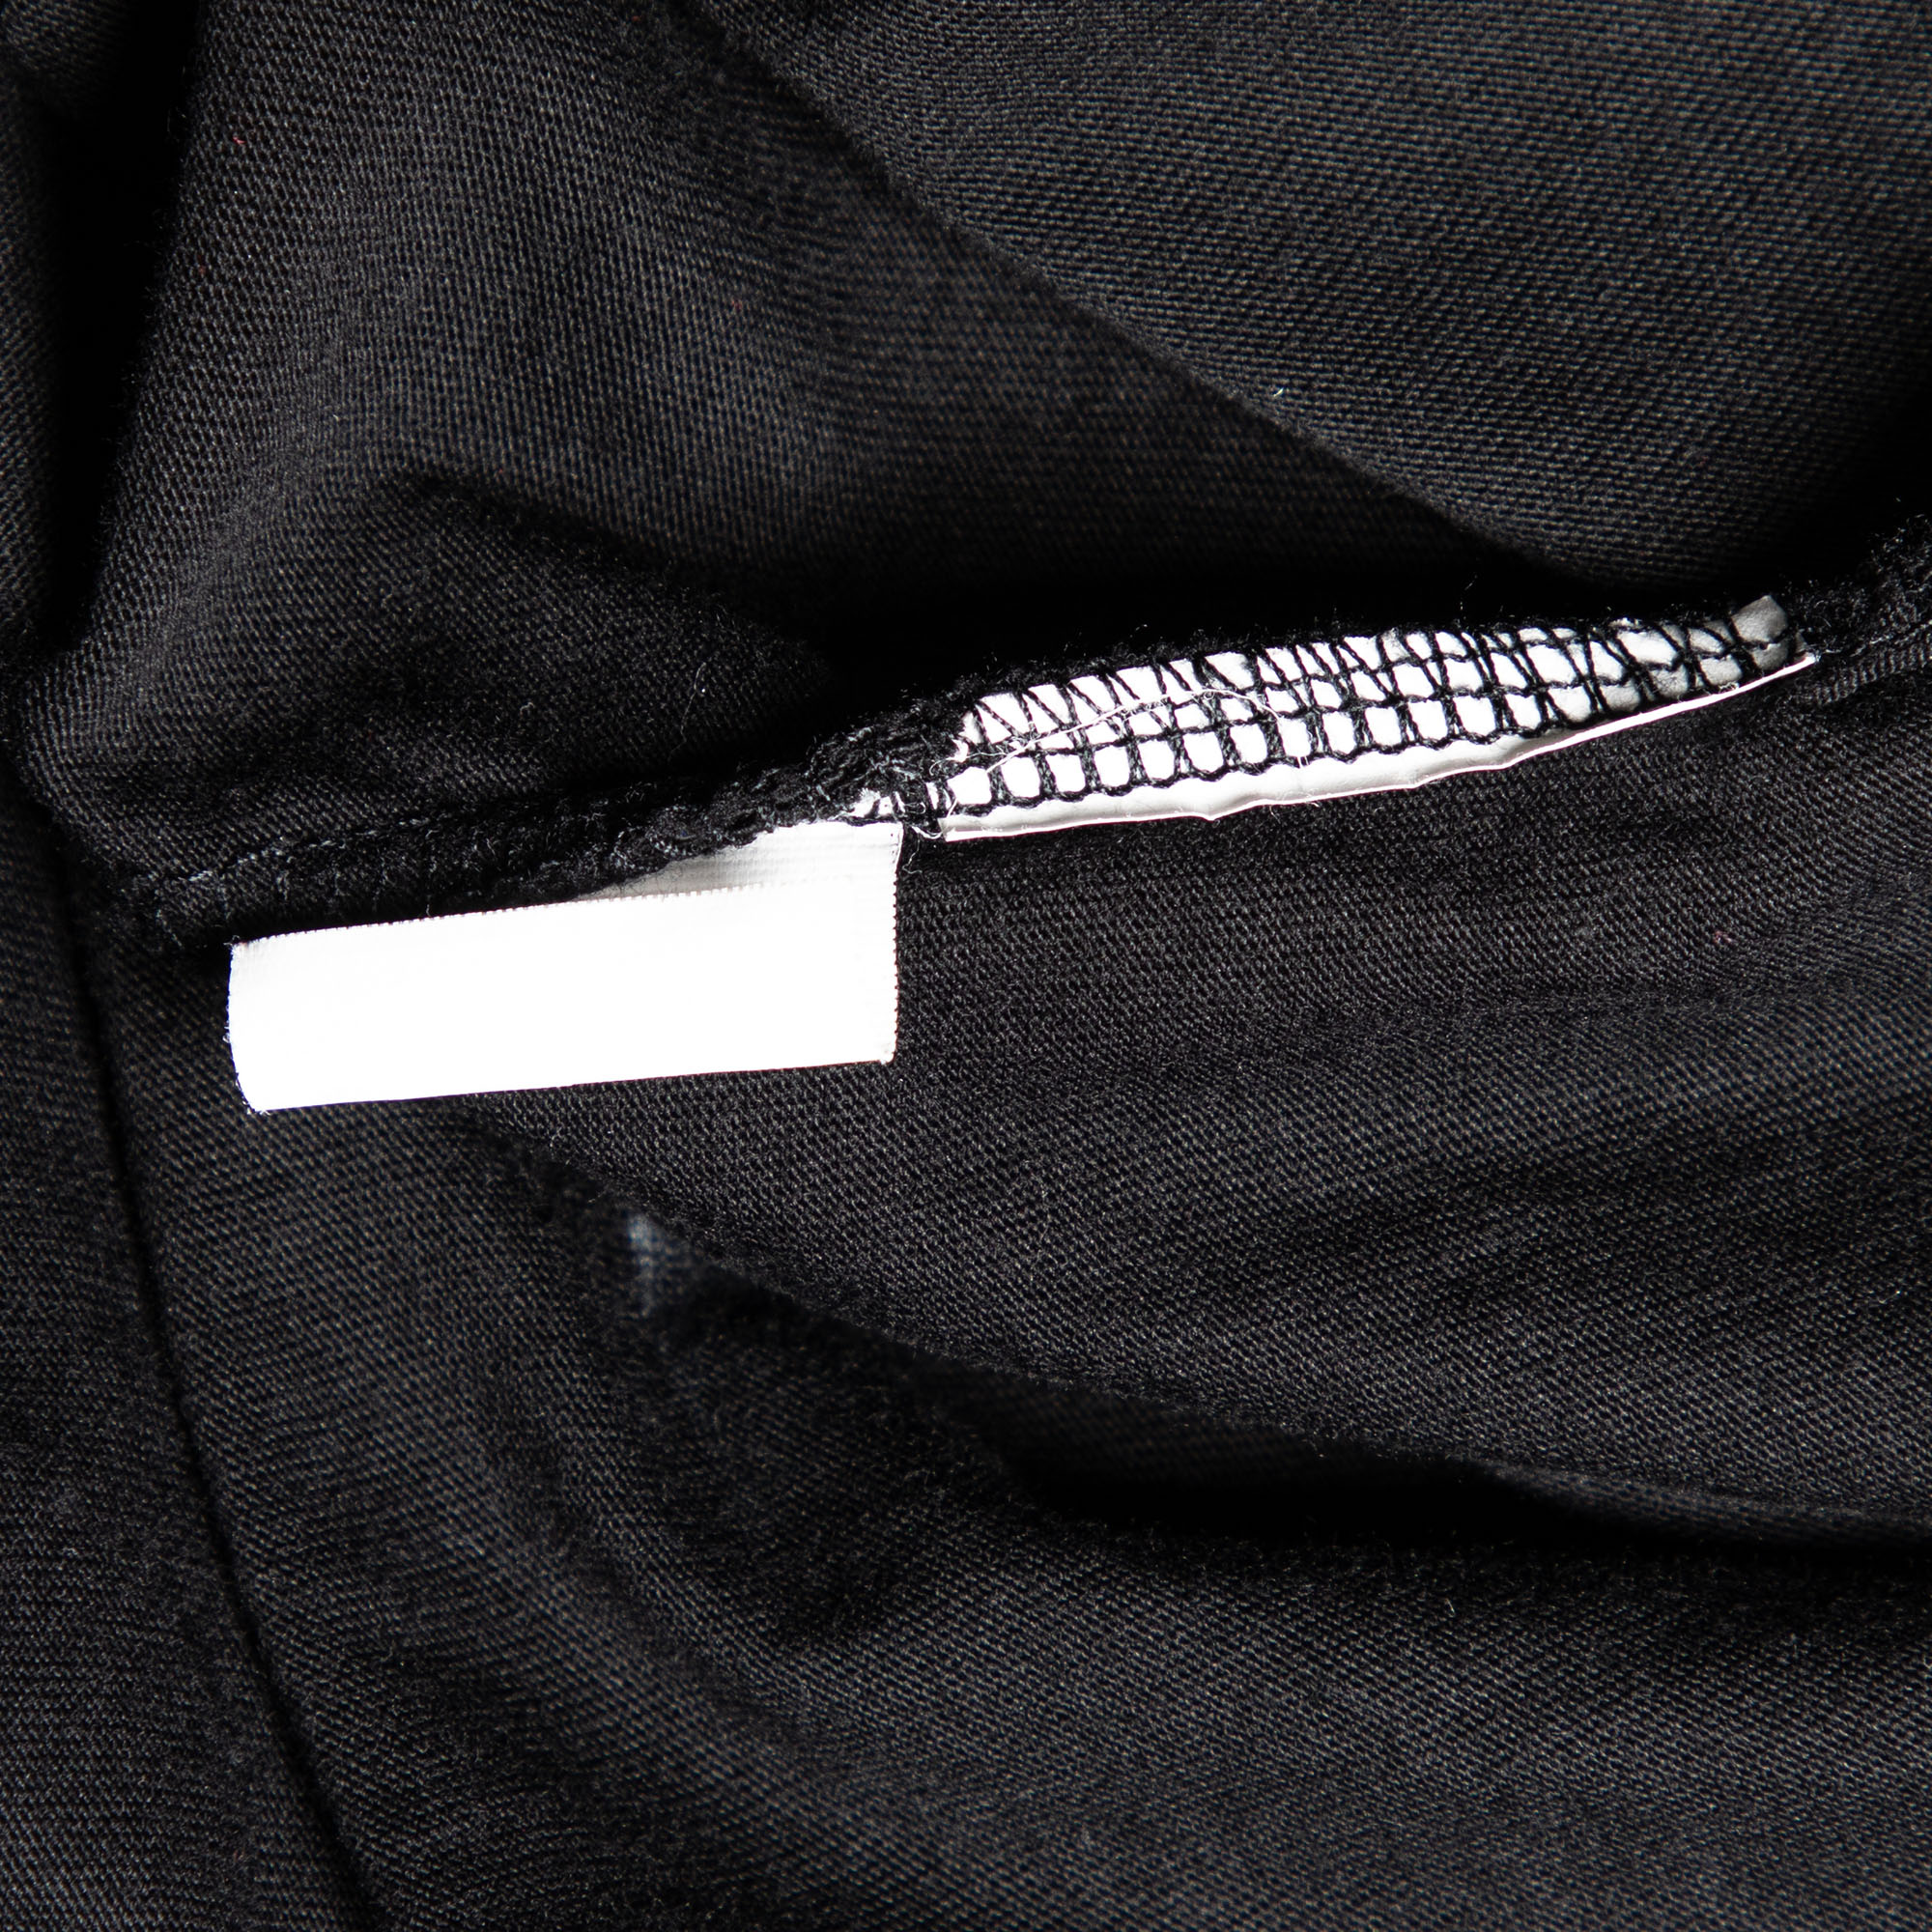 Sportmax Black Cotton Knit Ruffle Detail Top M